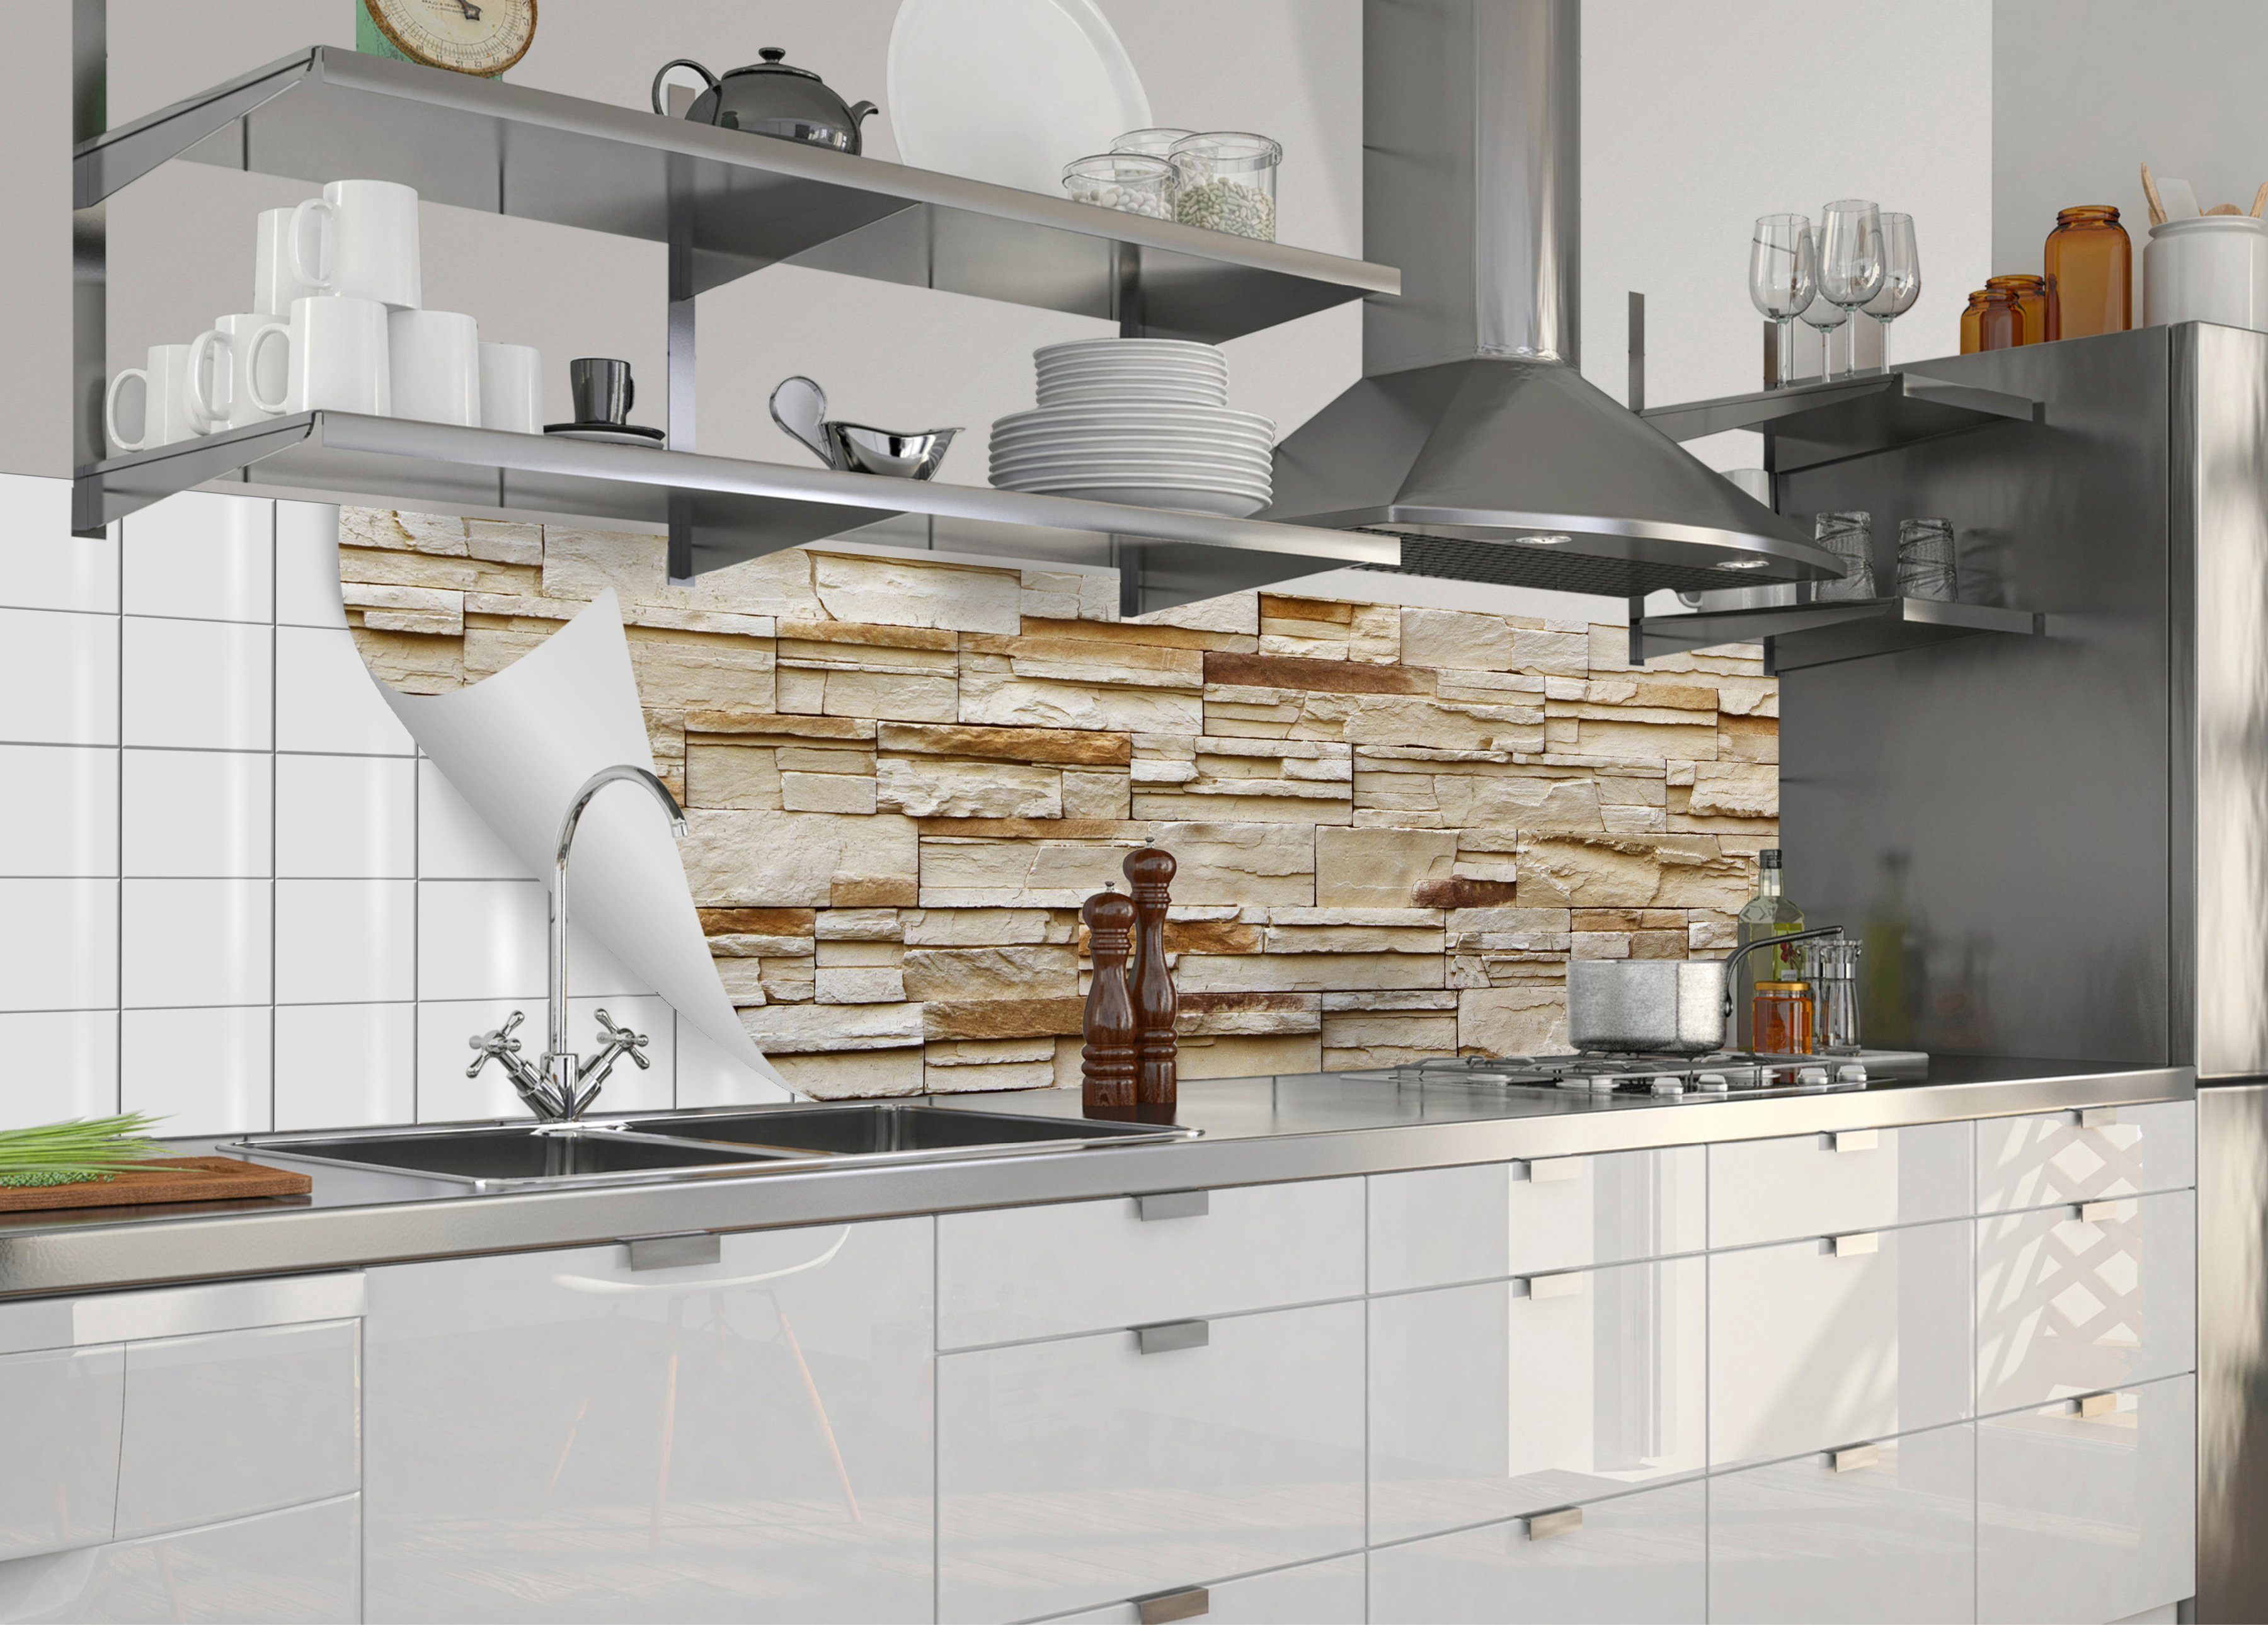 MySpotti Küchenrückwand fixy Rustical grau Bricks, selbstklebende flexible Küchenrückwand-Folie und